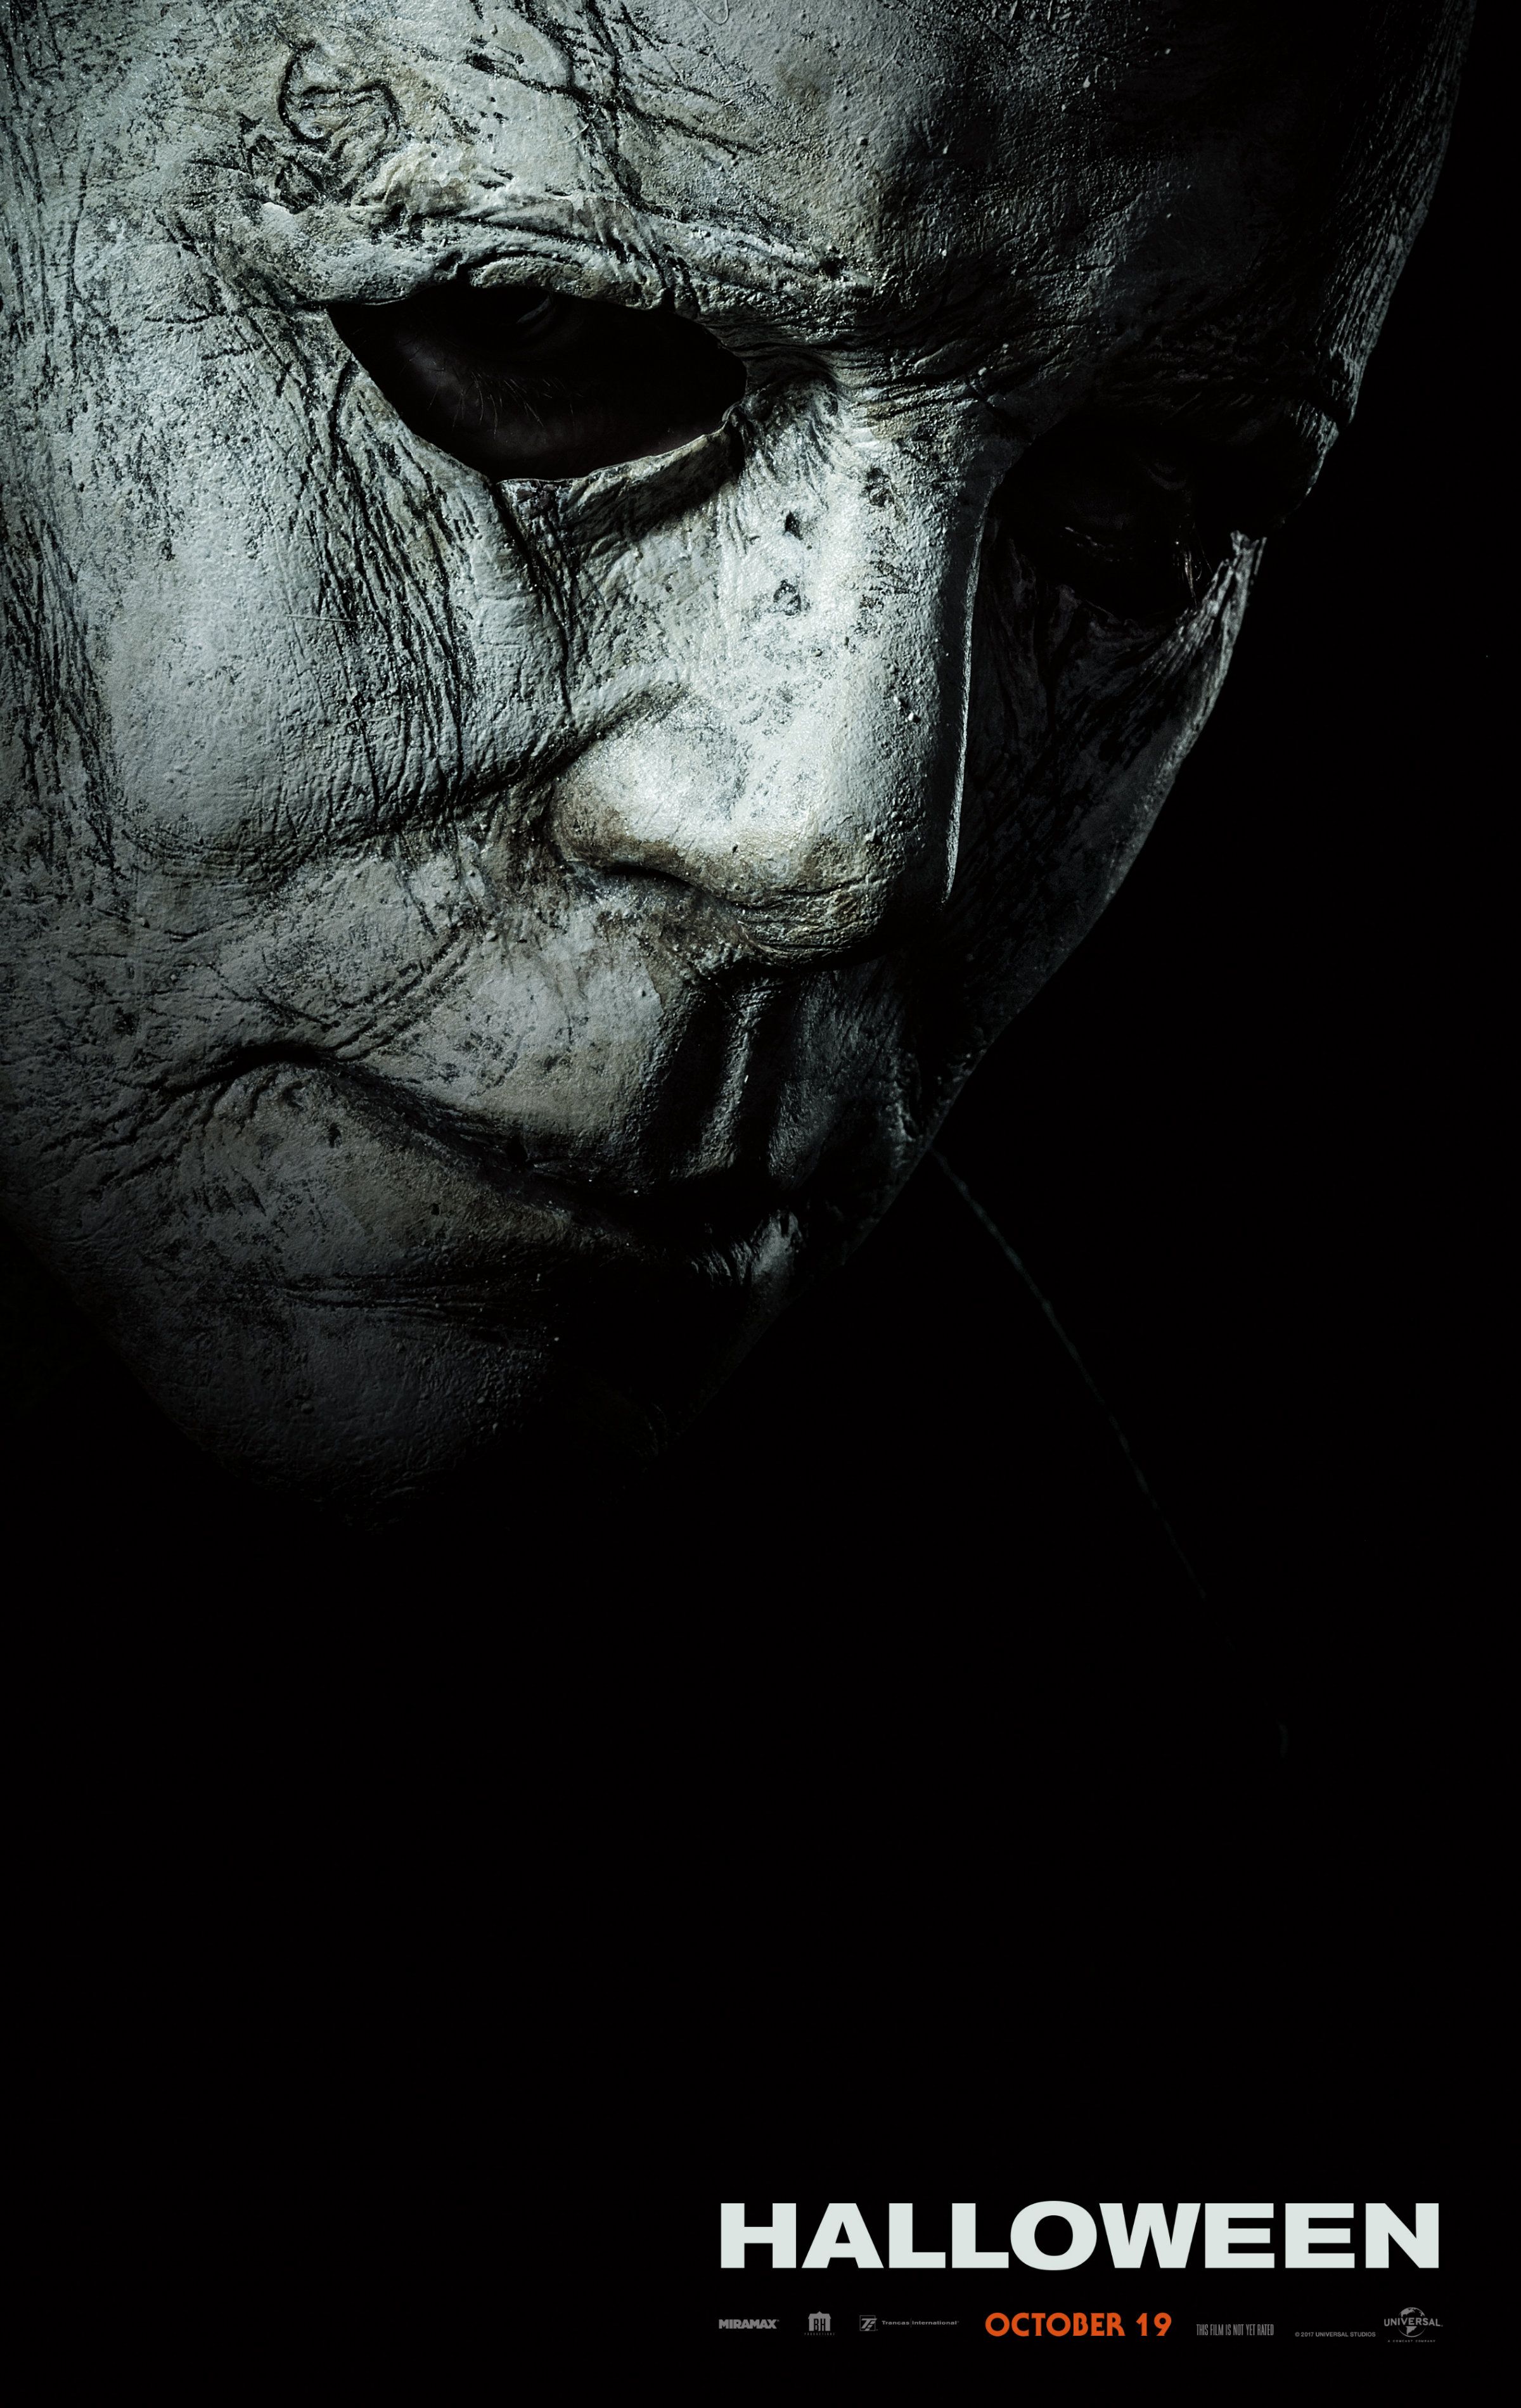 Halloween Trailer Unmasks Michael Myers & Reveals 1978 Movie Connection